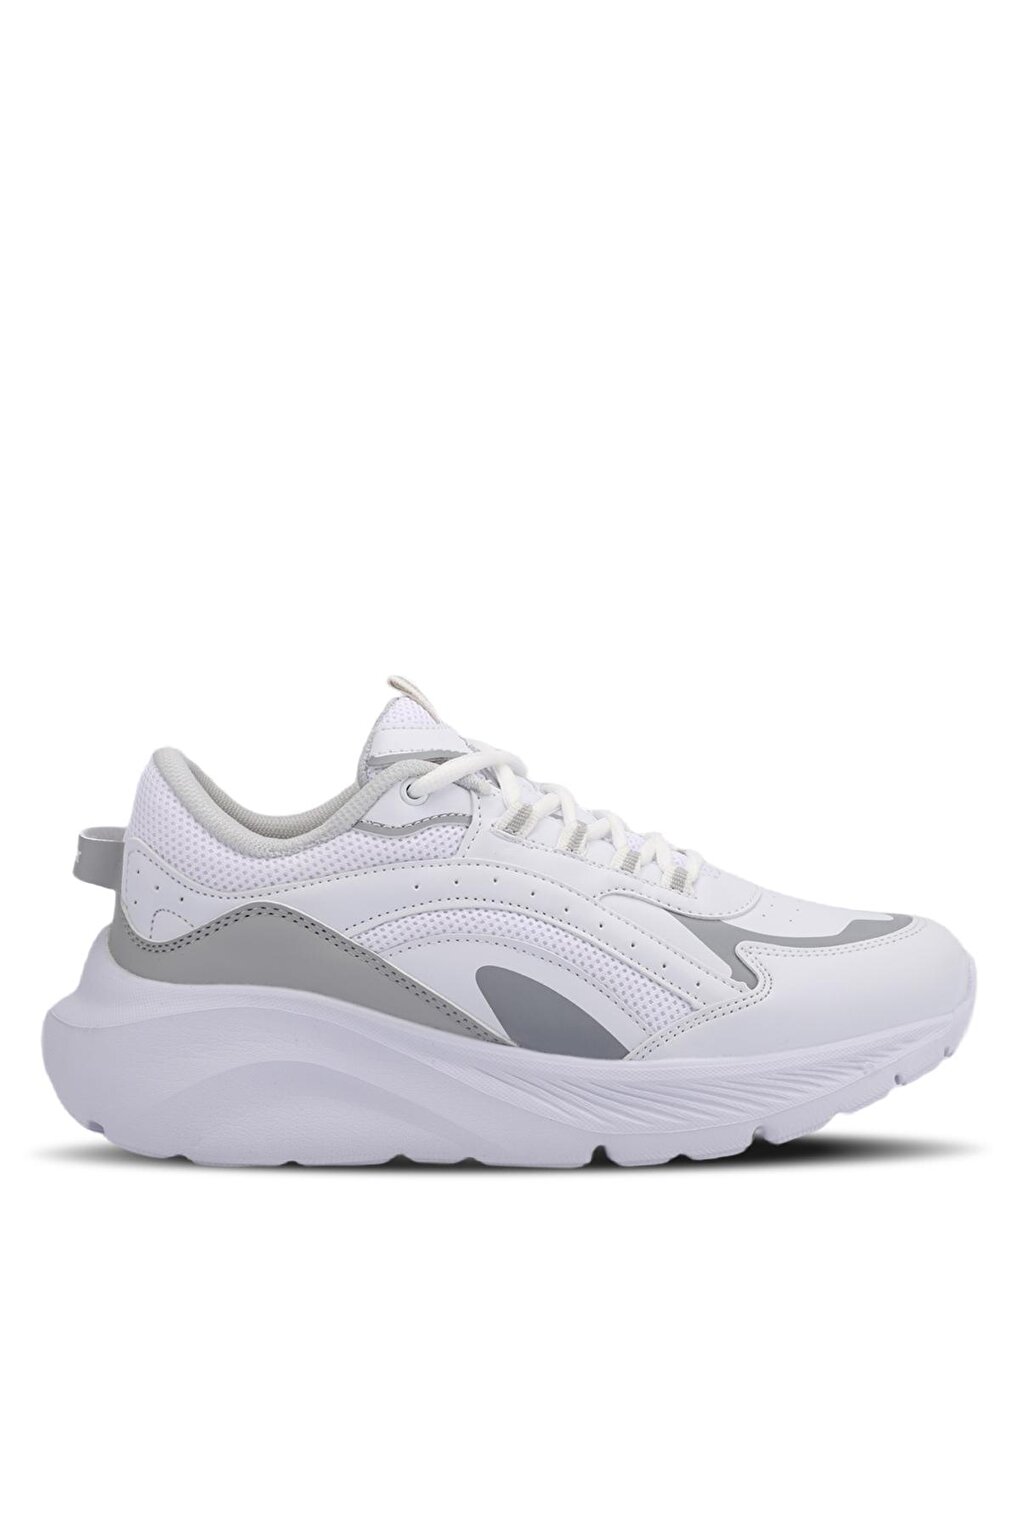 BETHEL Sneaker Женская обувь Белый/Серый SLAZENGER